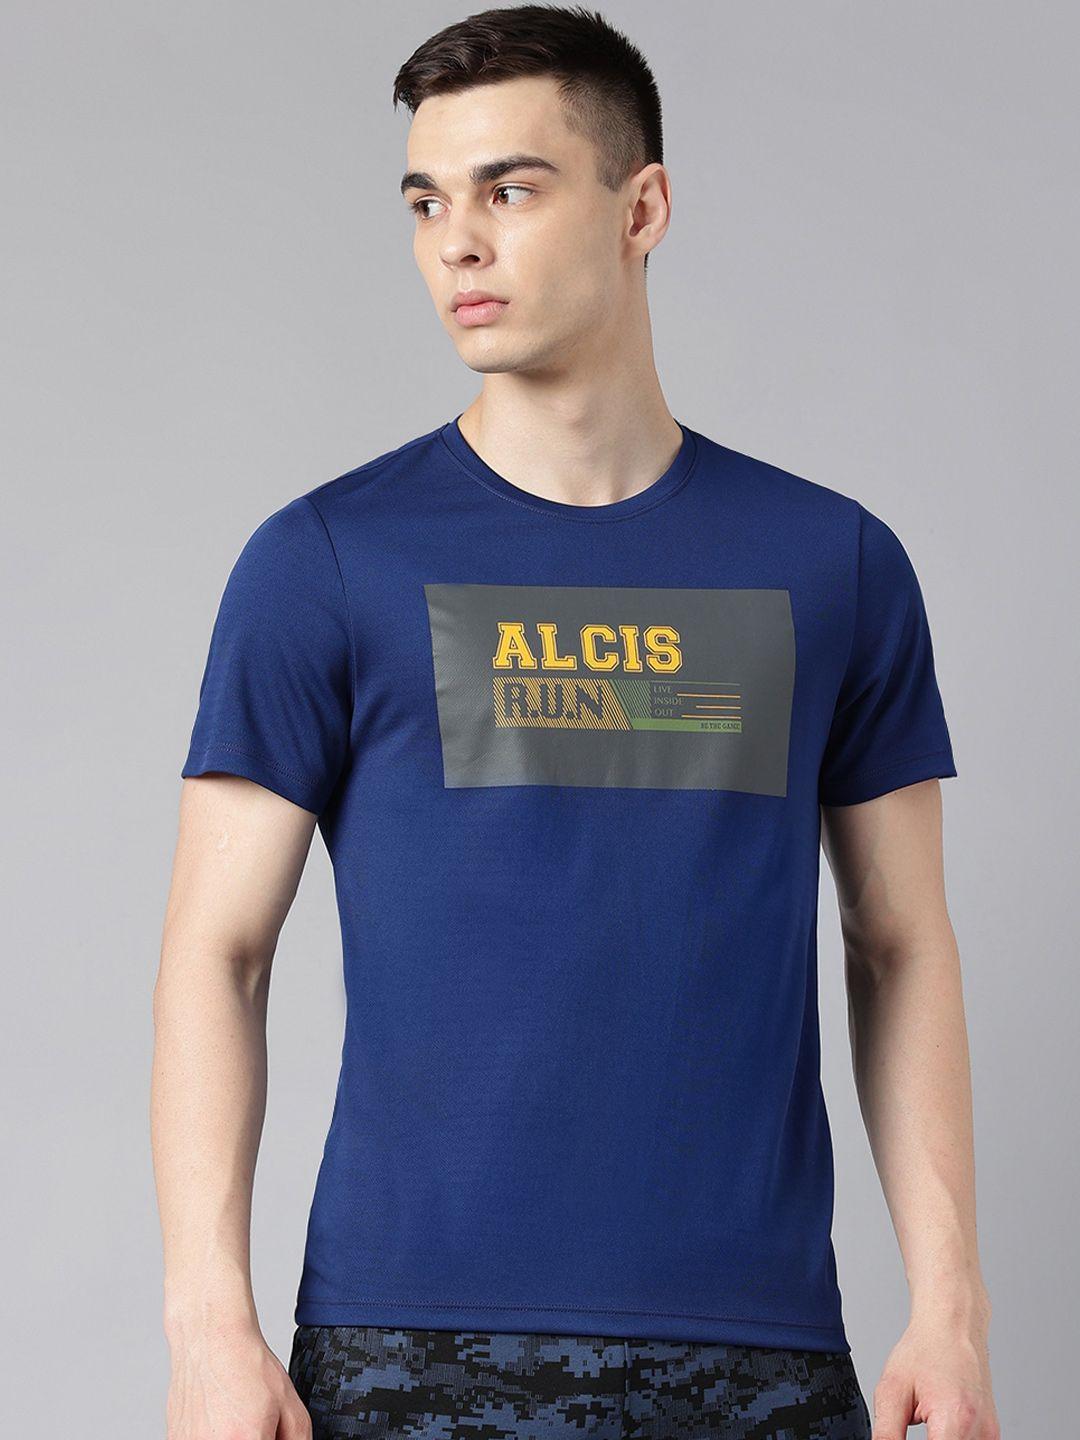 alcis typography printed anti-static dry tech slim fit sports t-shirt